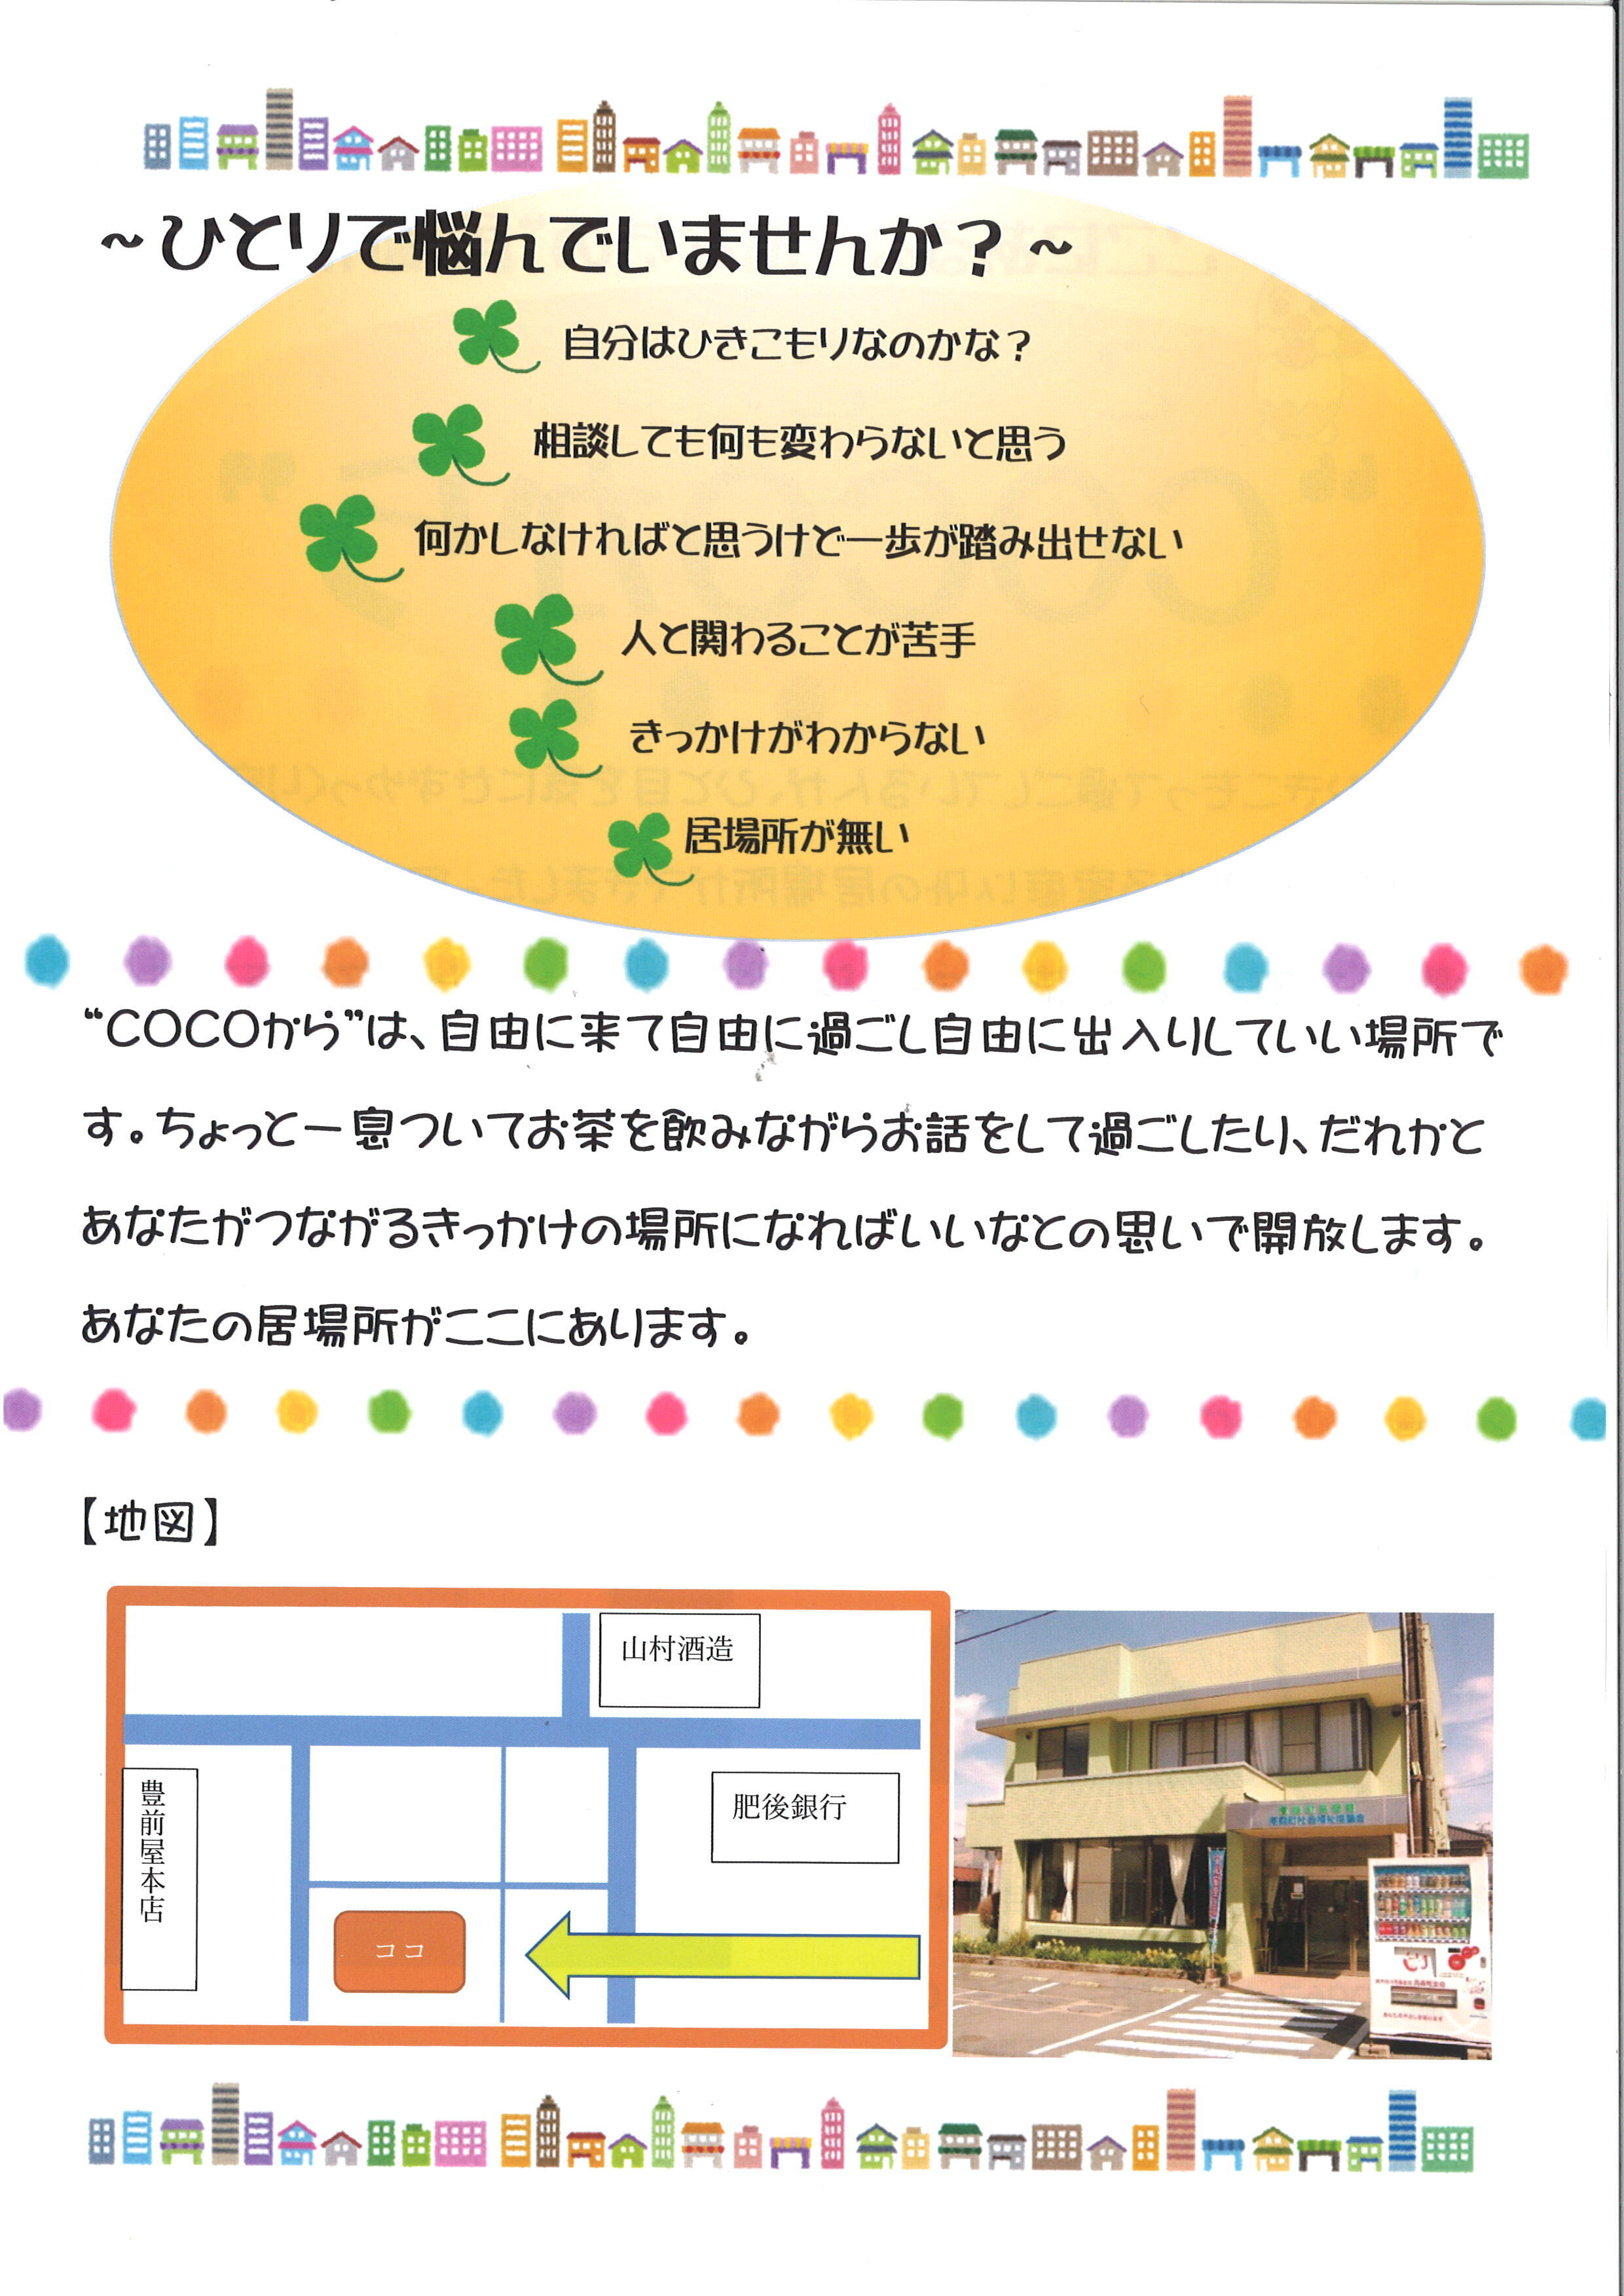 http://www.town.takamori.kumamoto.jp/chosha/somu/upload/d8afb3a7b084aa0a2b9d82e3c06d881a10a858b5.jpg